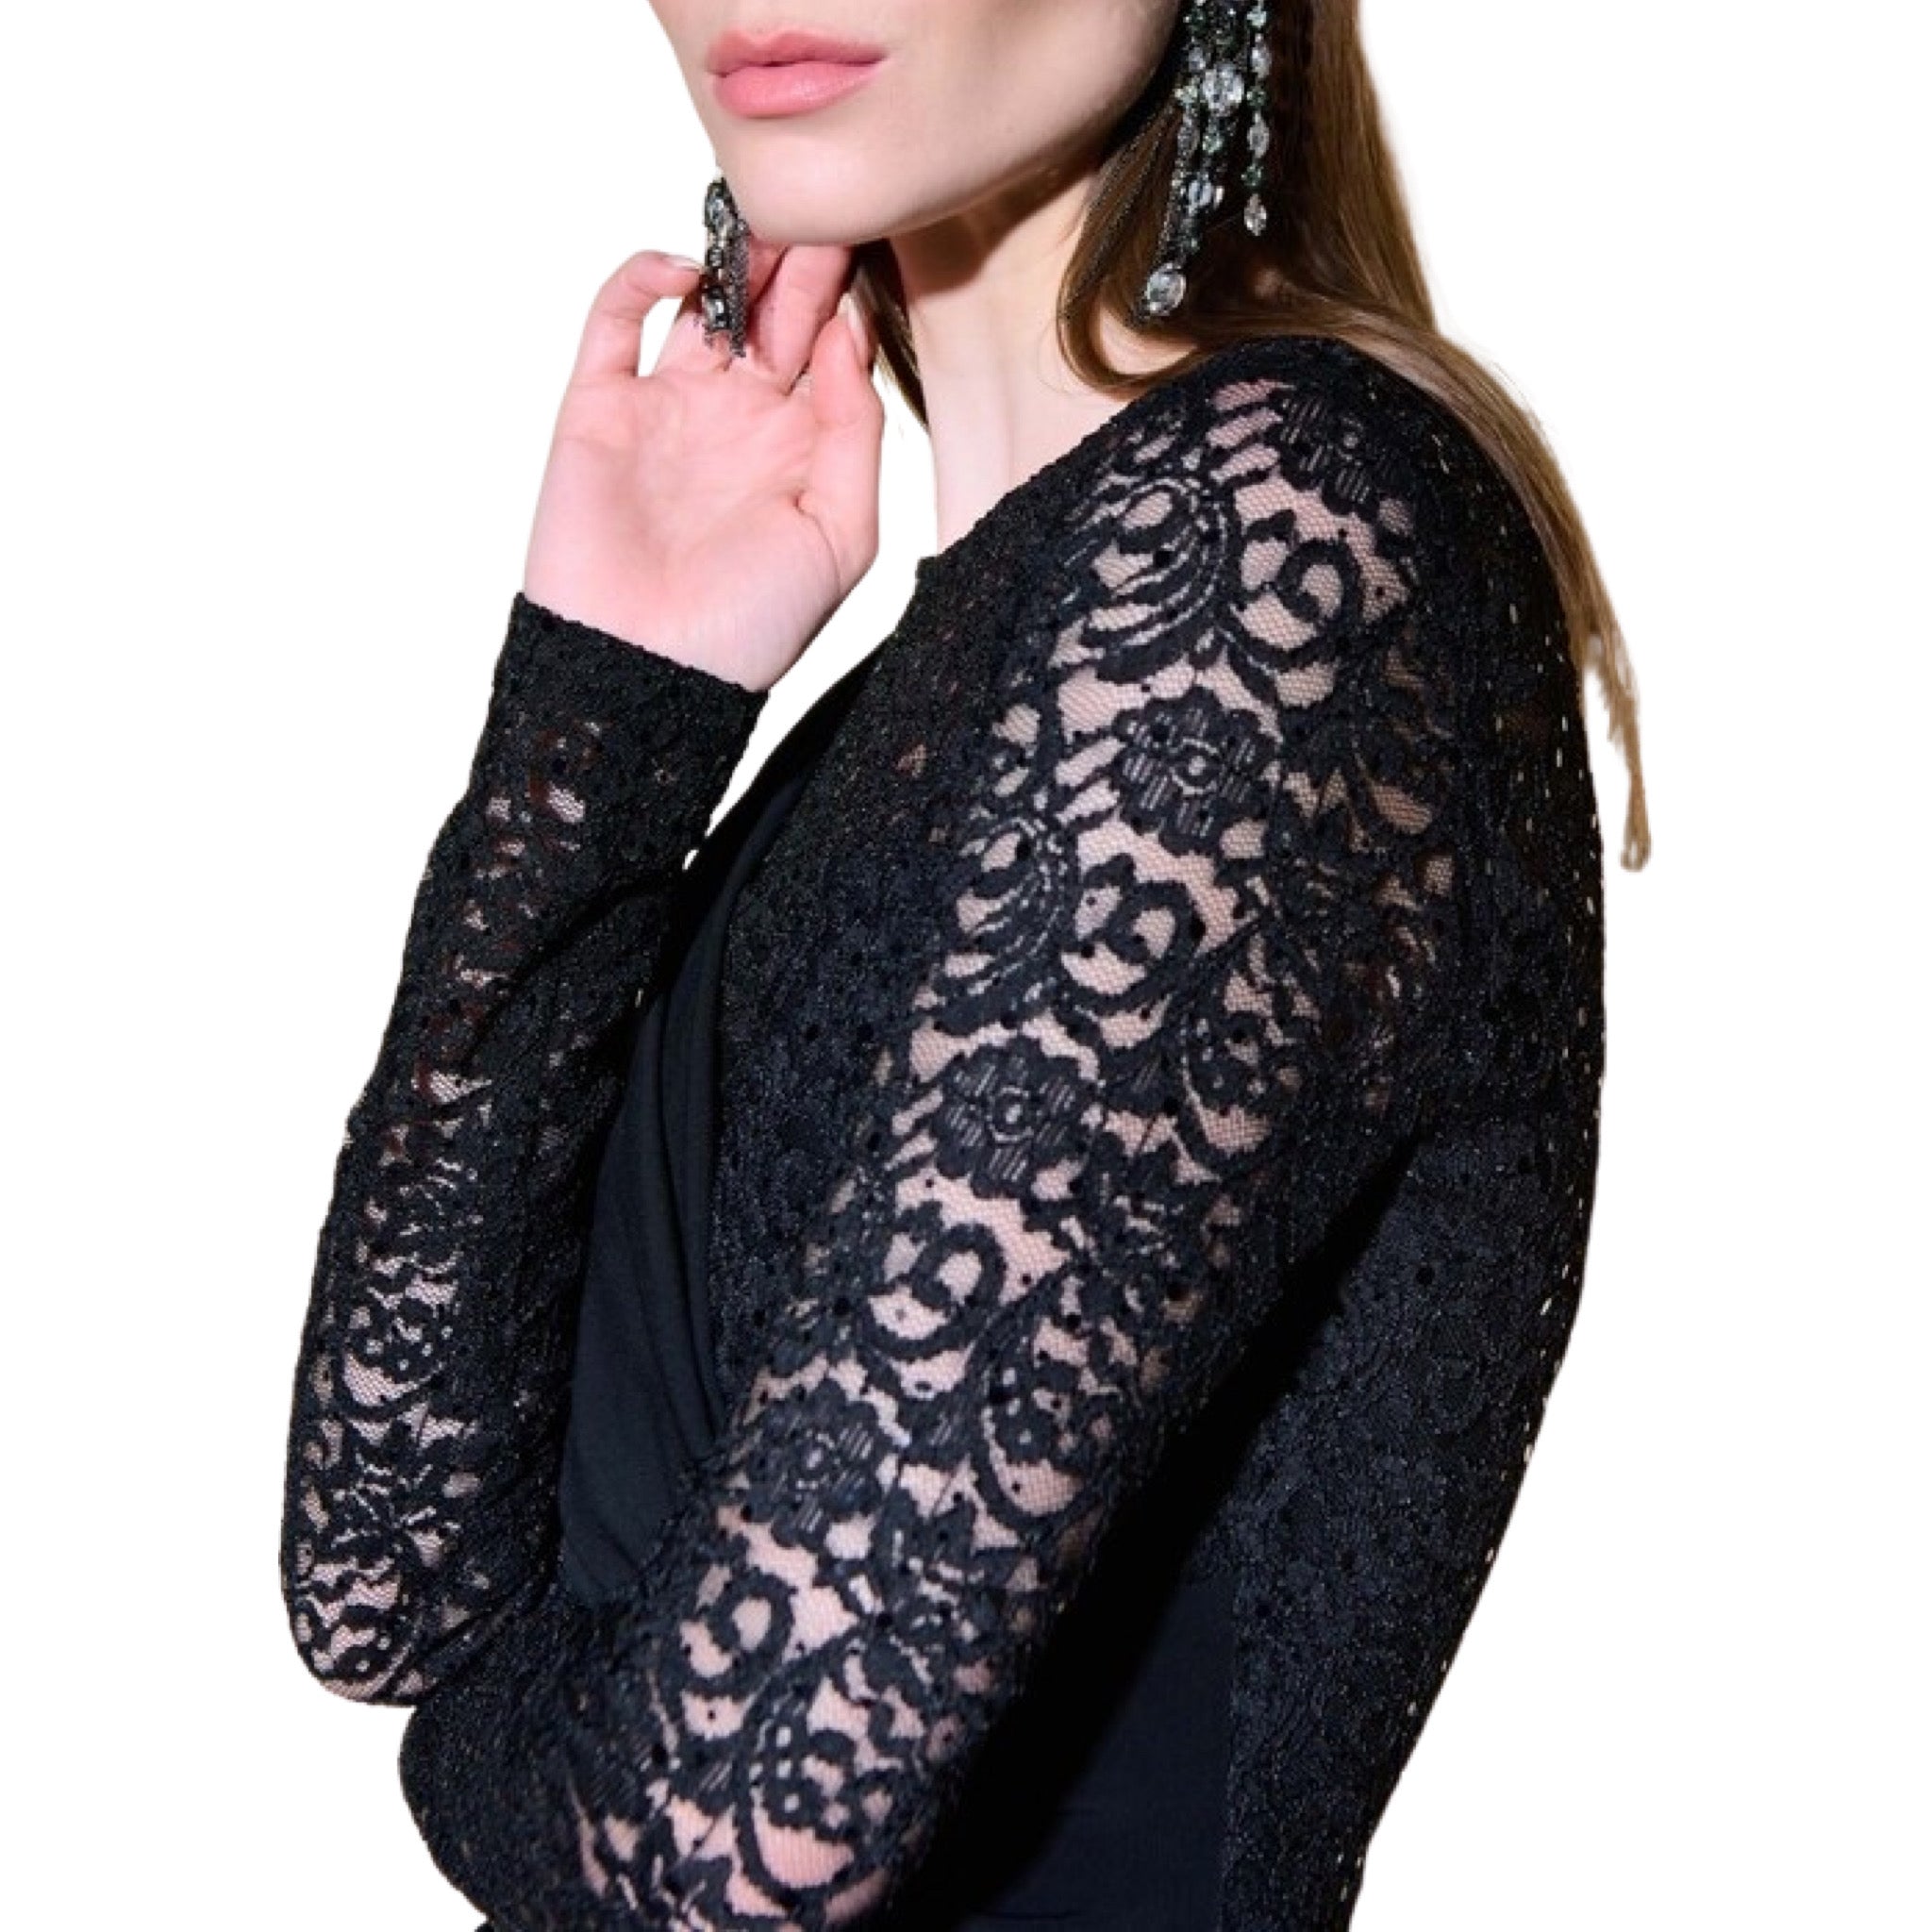 Black Lace Dress With Draped Sash